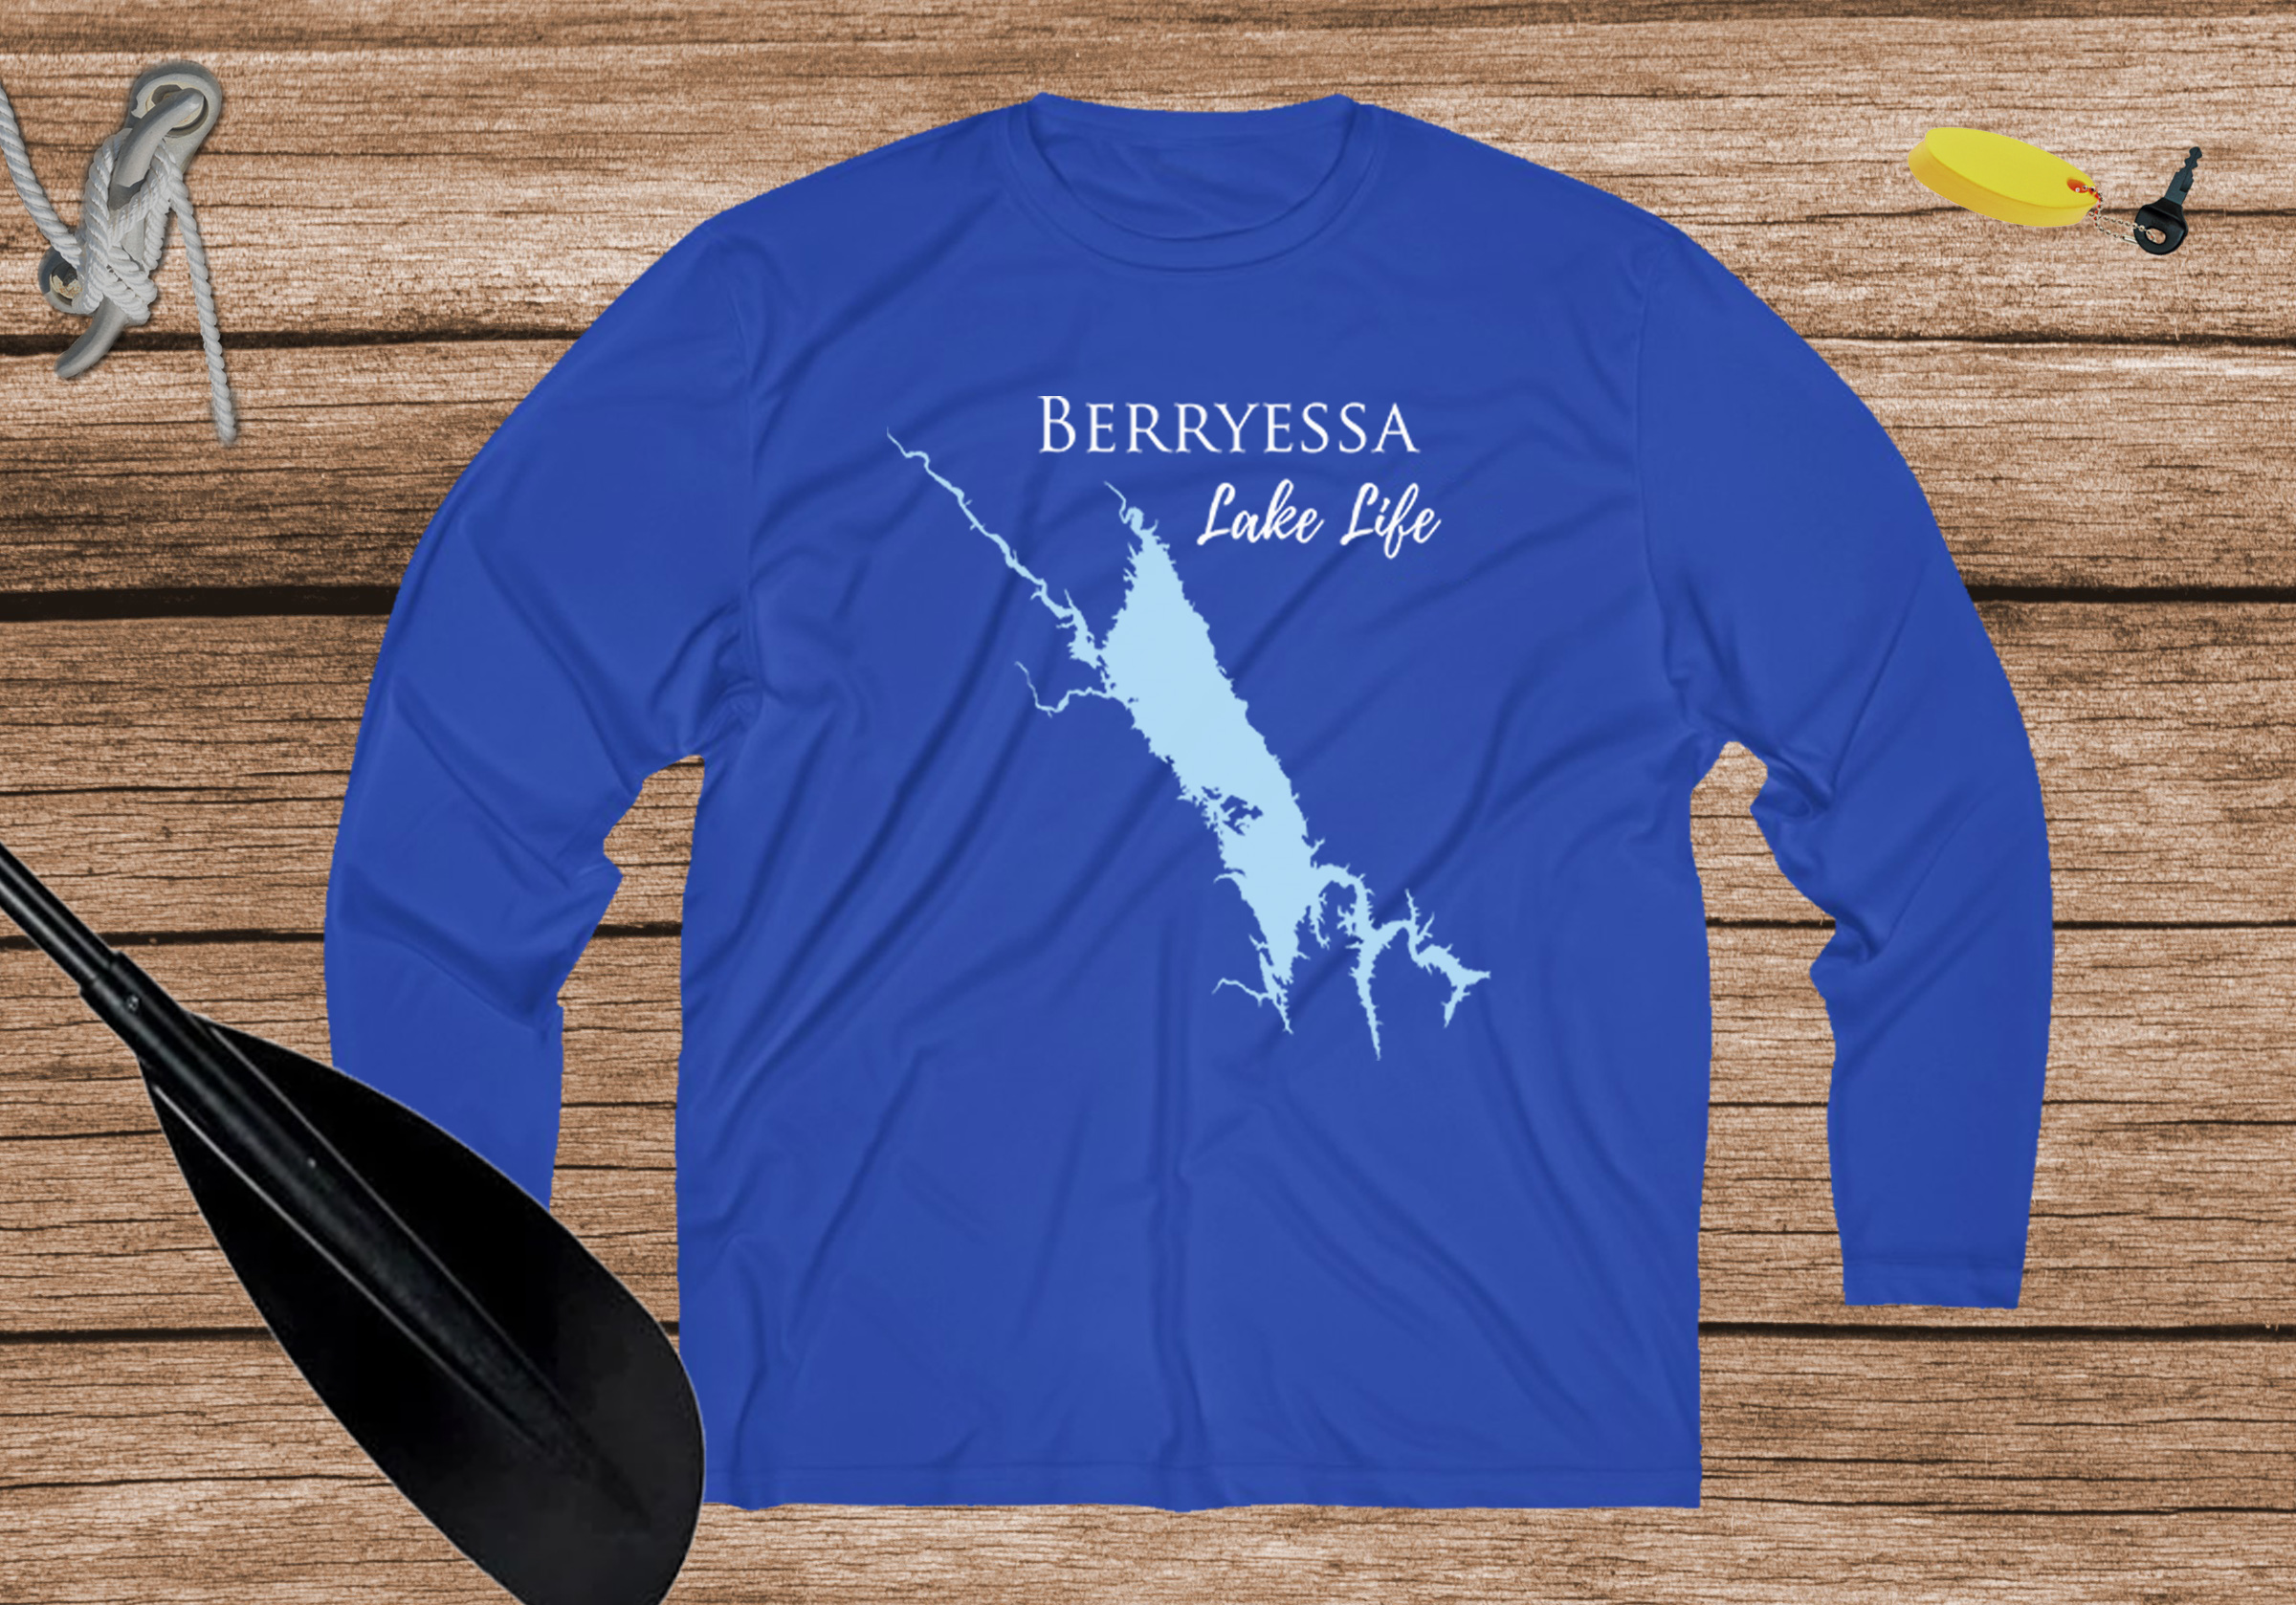 Berryessa Lake Life Dri-fit Boating Shirt - Breathable Material- Men's Long Sleeve Moisture Wicking Tee - Napa Valley California Lake